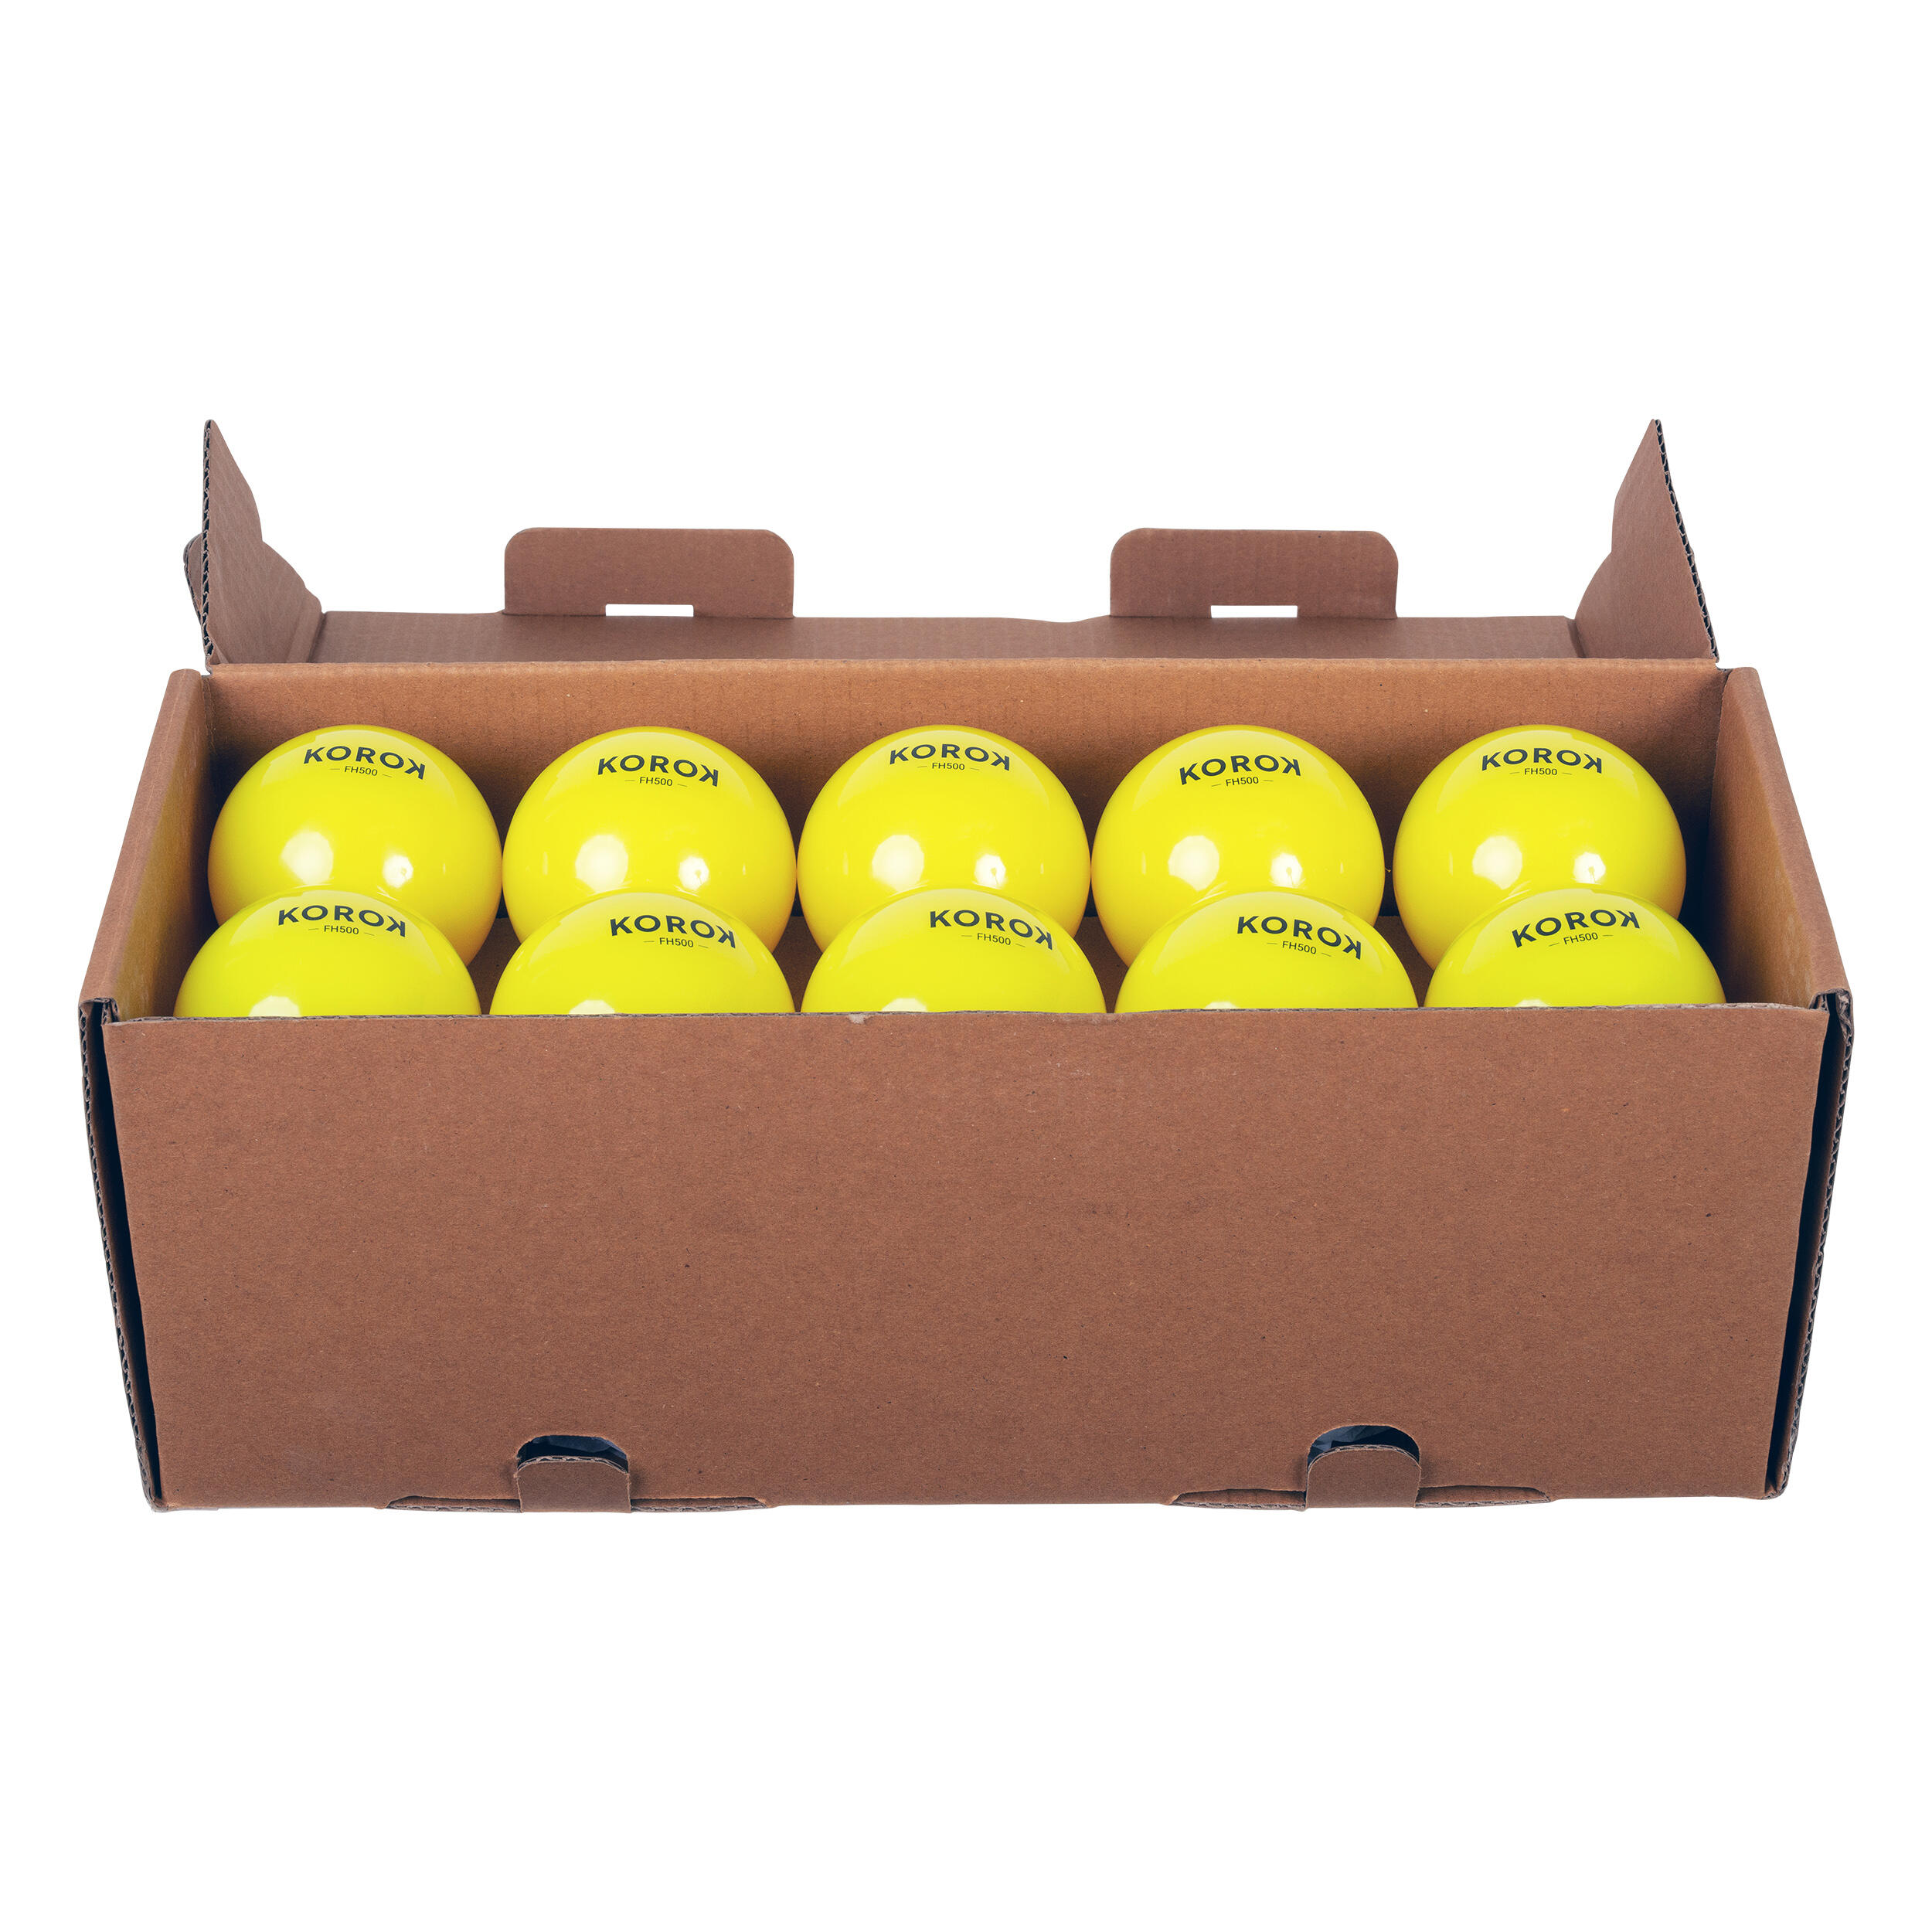 KOROK Smooth Field Hockey Ball FH500 20-pack - Yellow